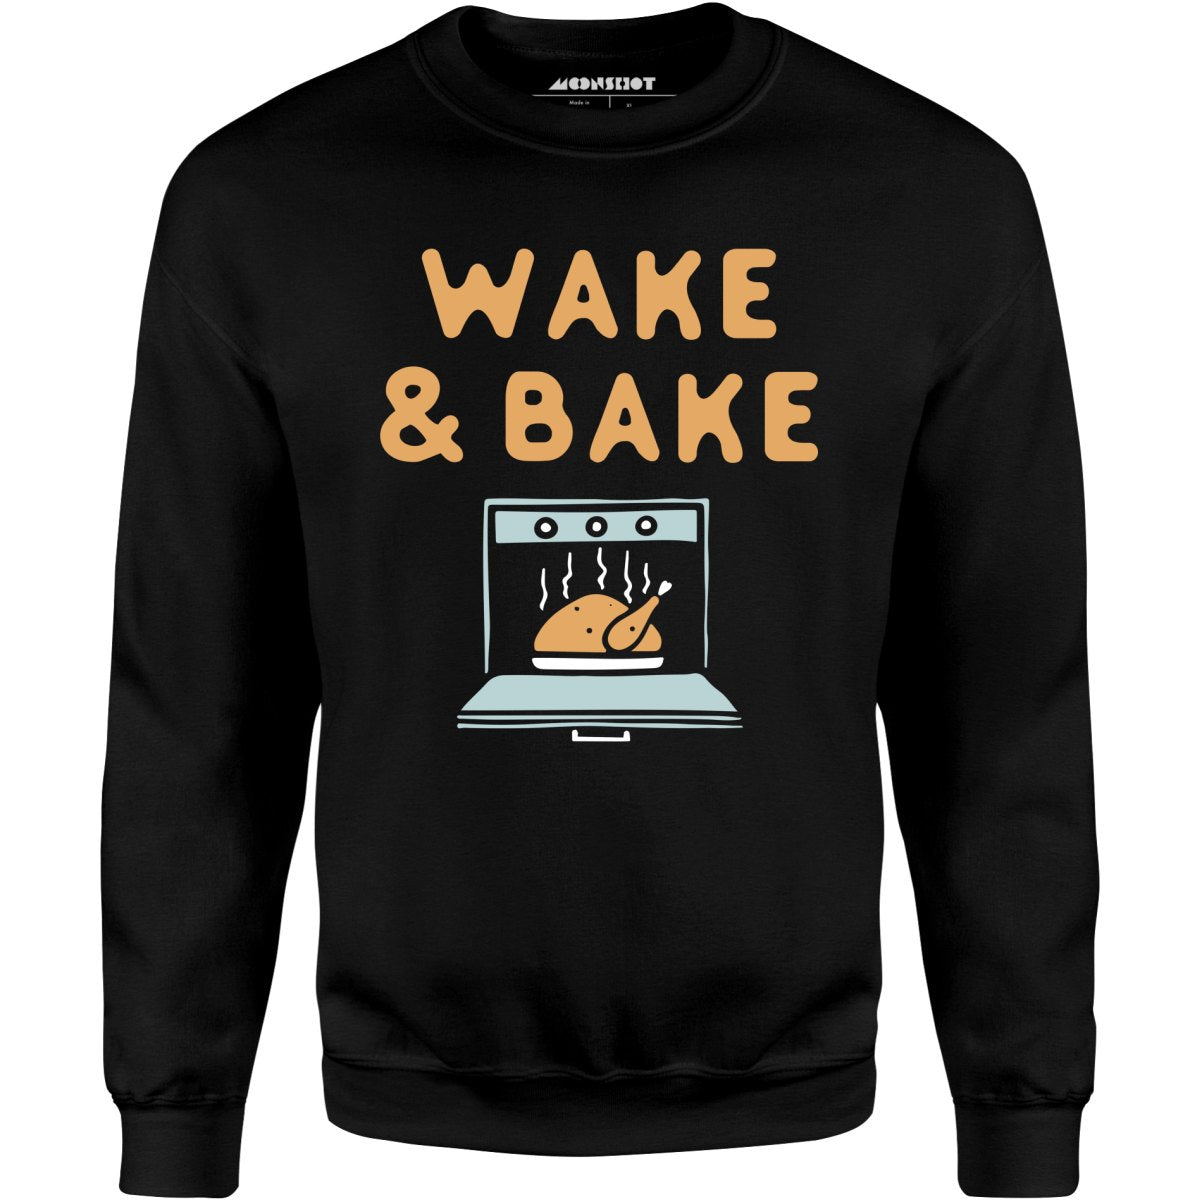 Wake & Bake - Unisex Sweatshirt